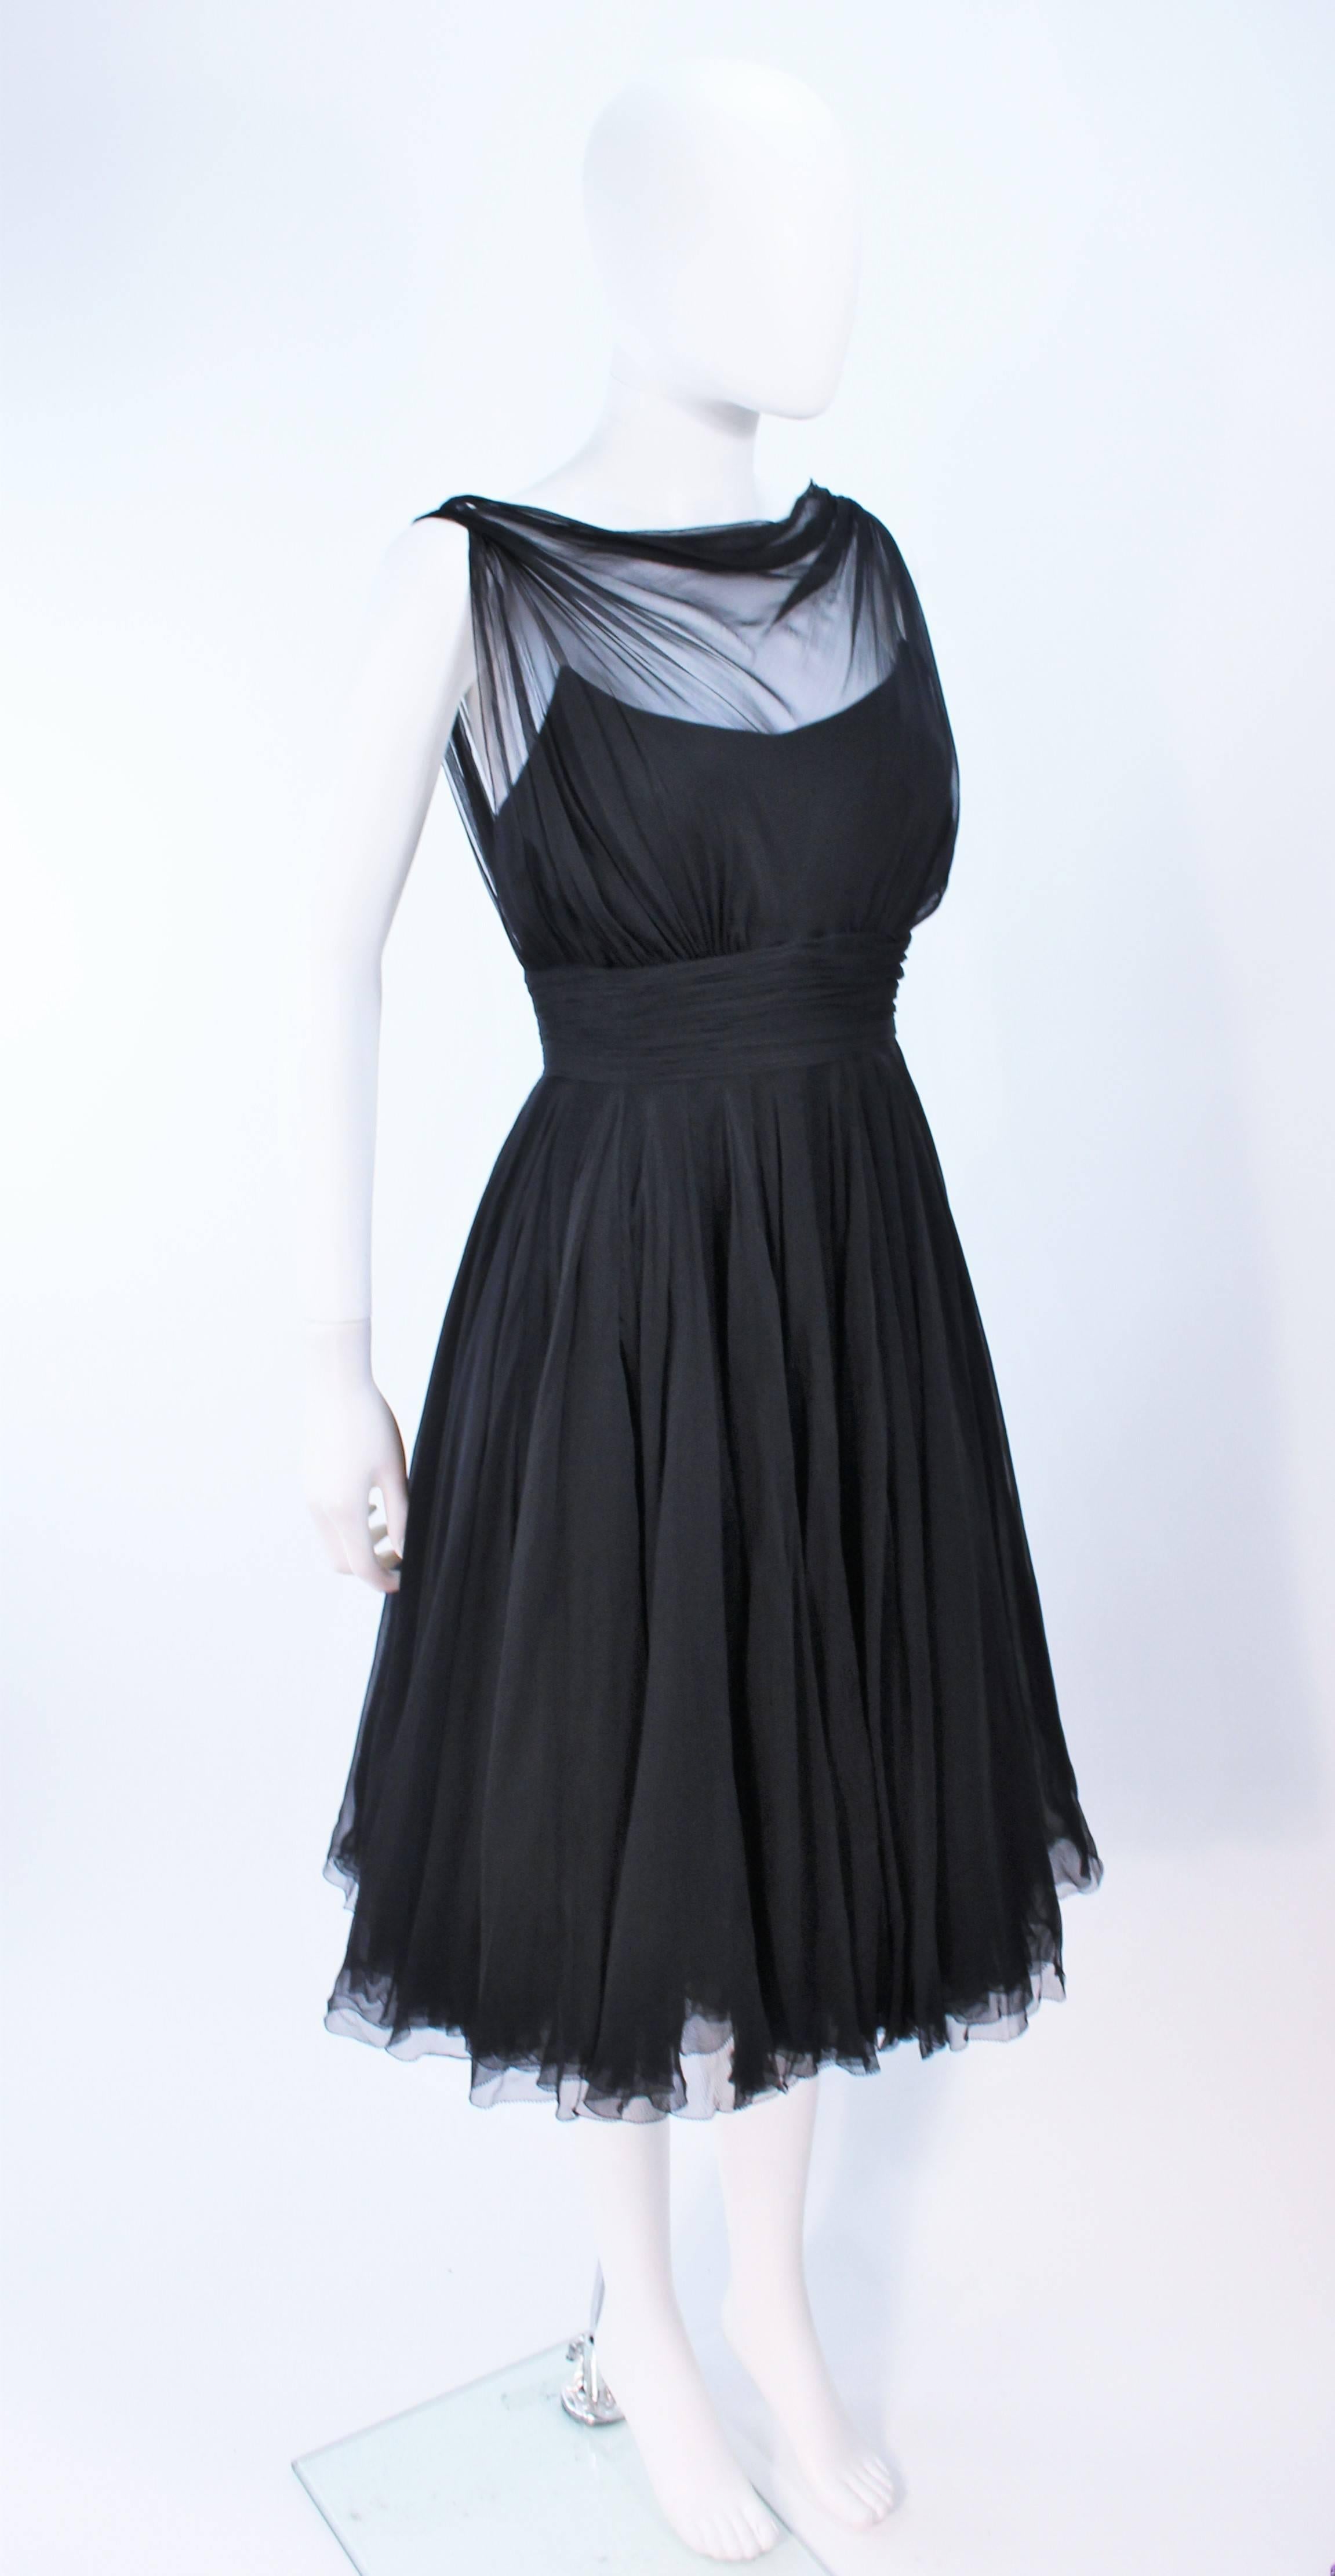 GALANOS Black Silk Chiffon Draped Cocktail Dress Size 2  For Sale 1